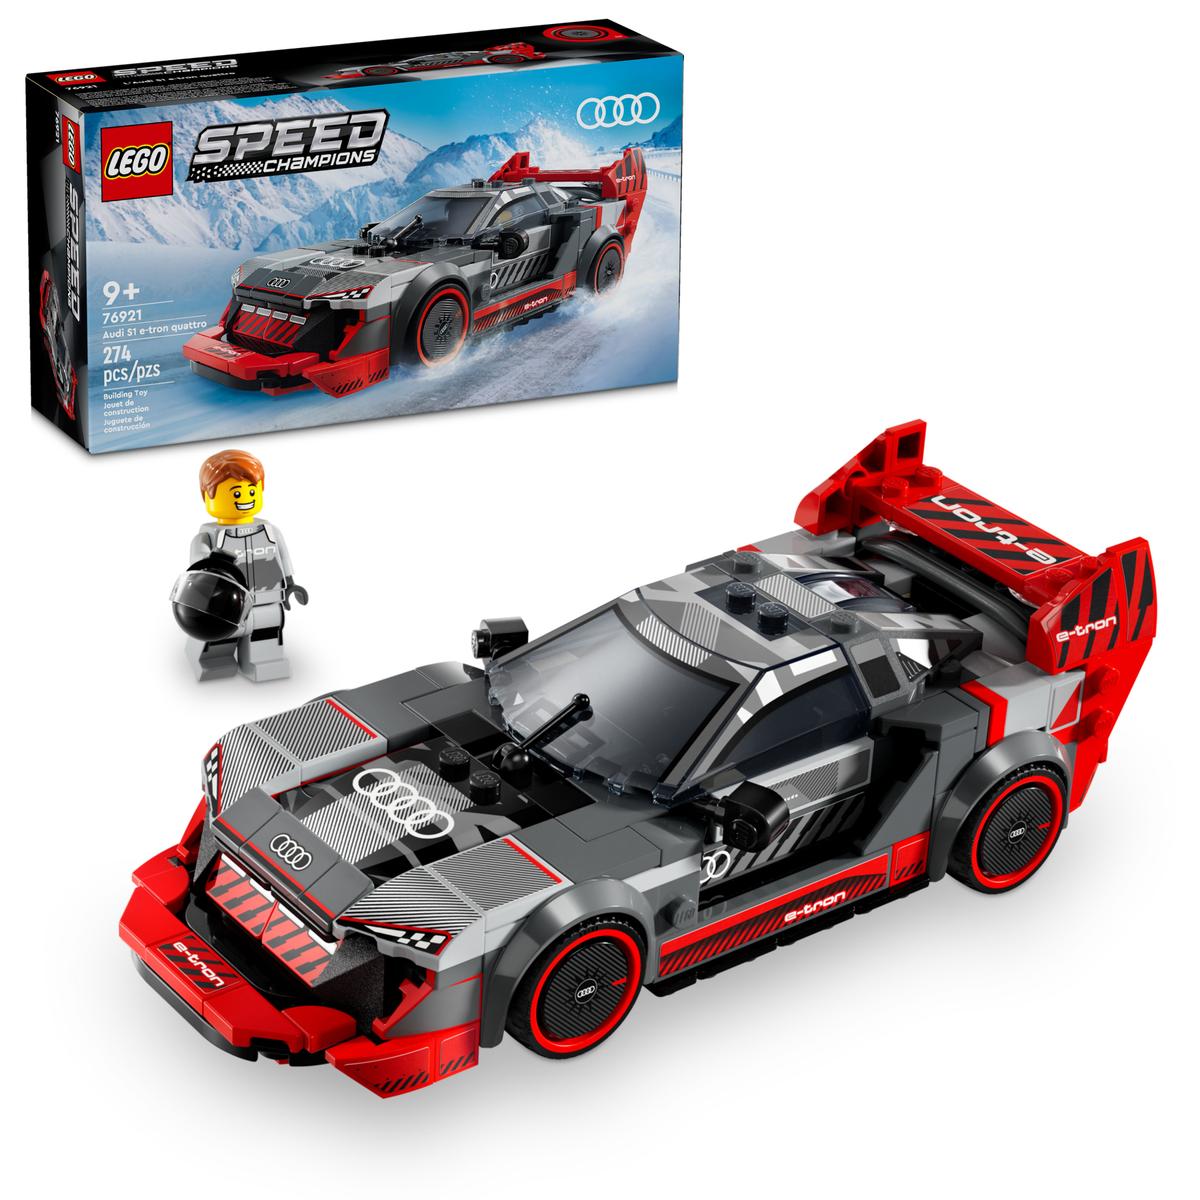 Lego 76921 - Speed Champions: Audi S1 e-tron quattro